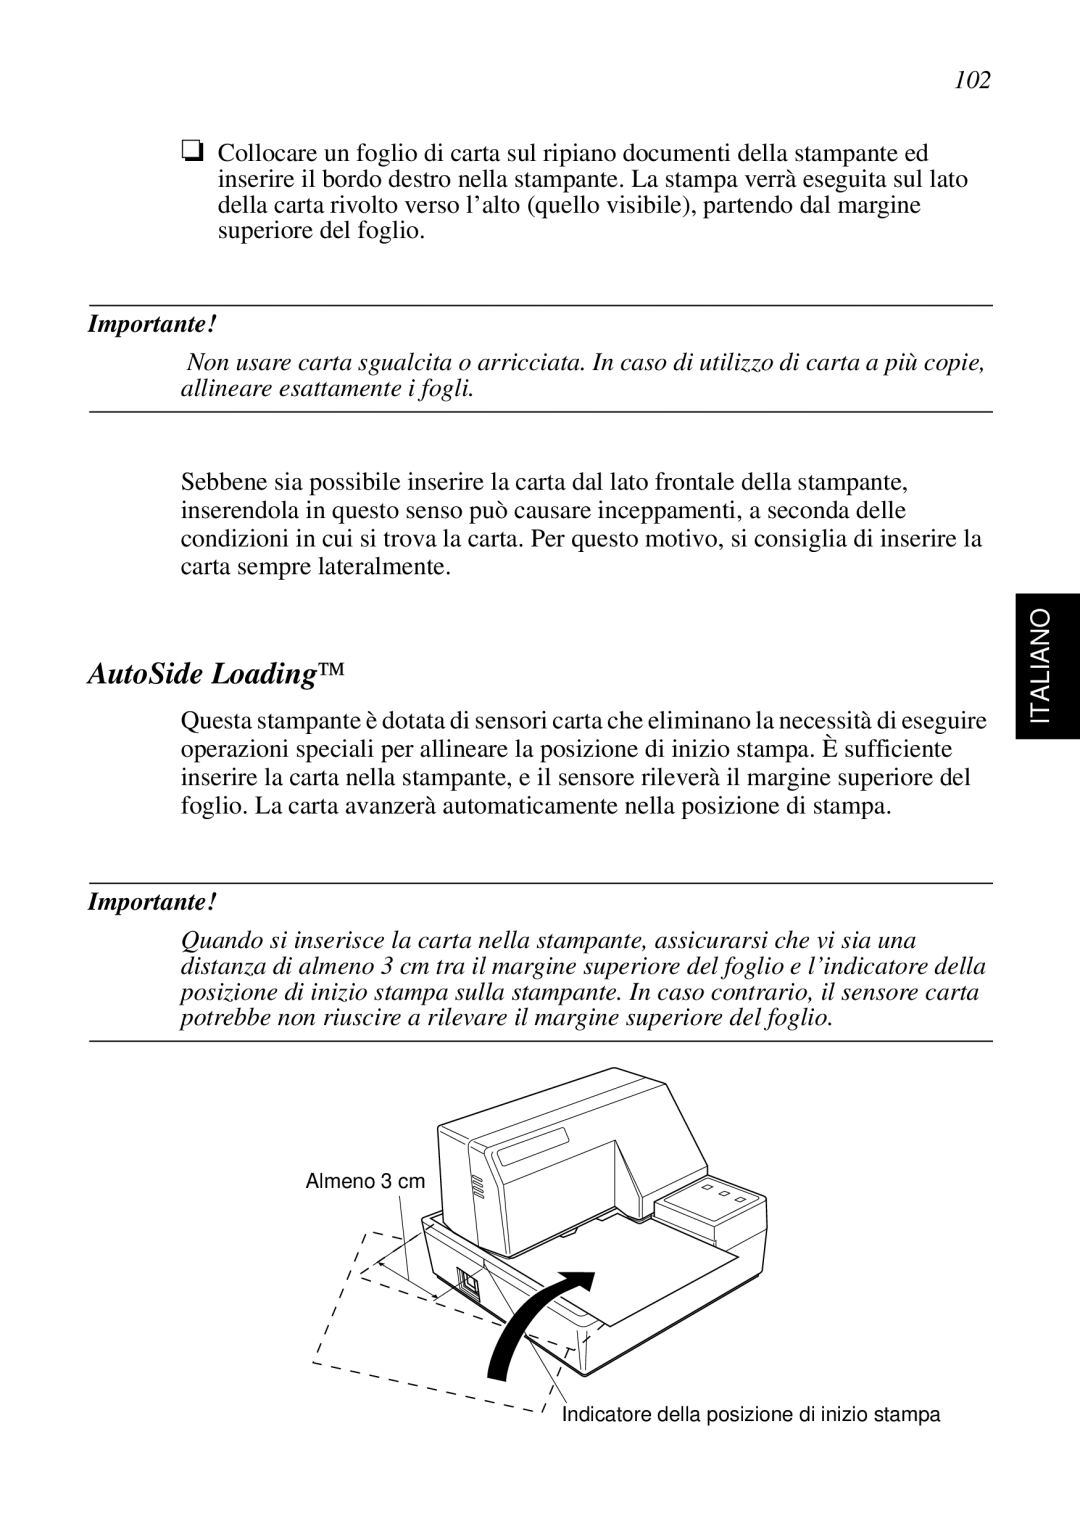 Star Micronics SP298 user manual AutoSide Loading, Importante, Italiano 